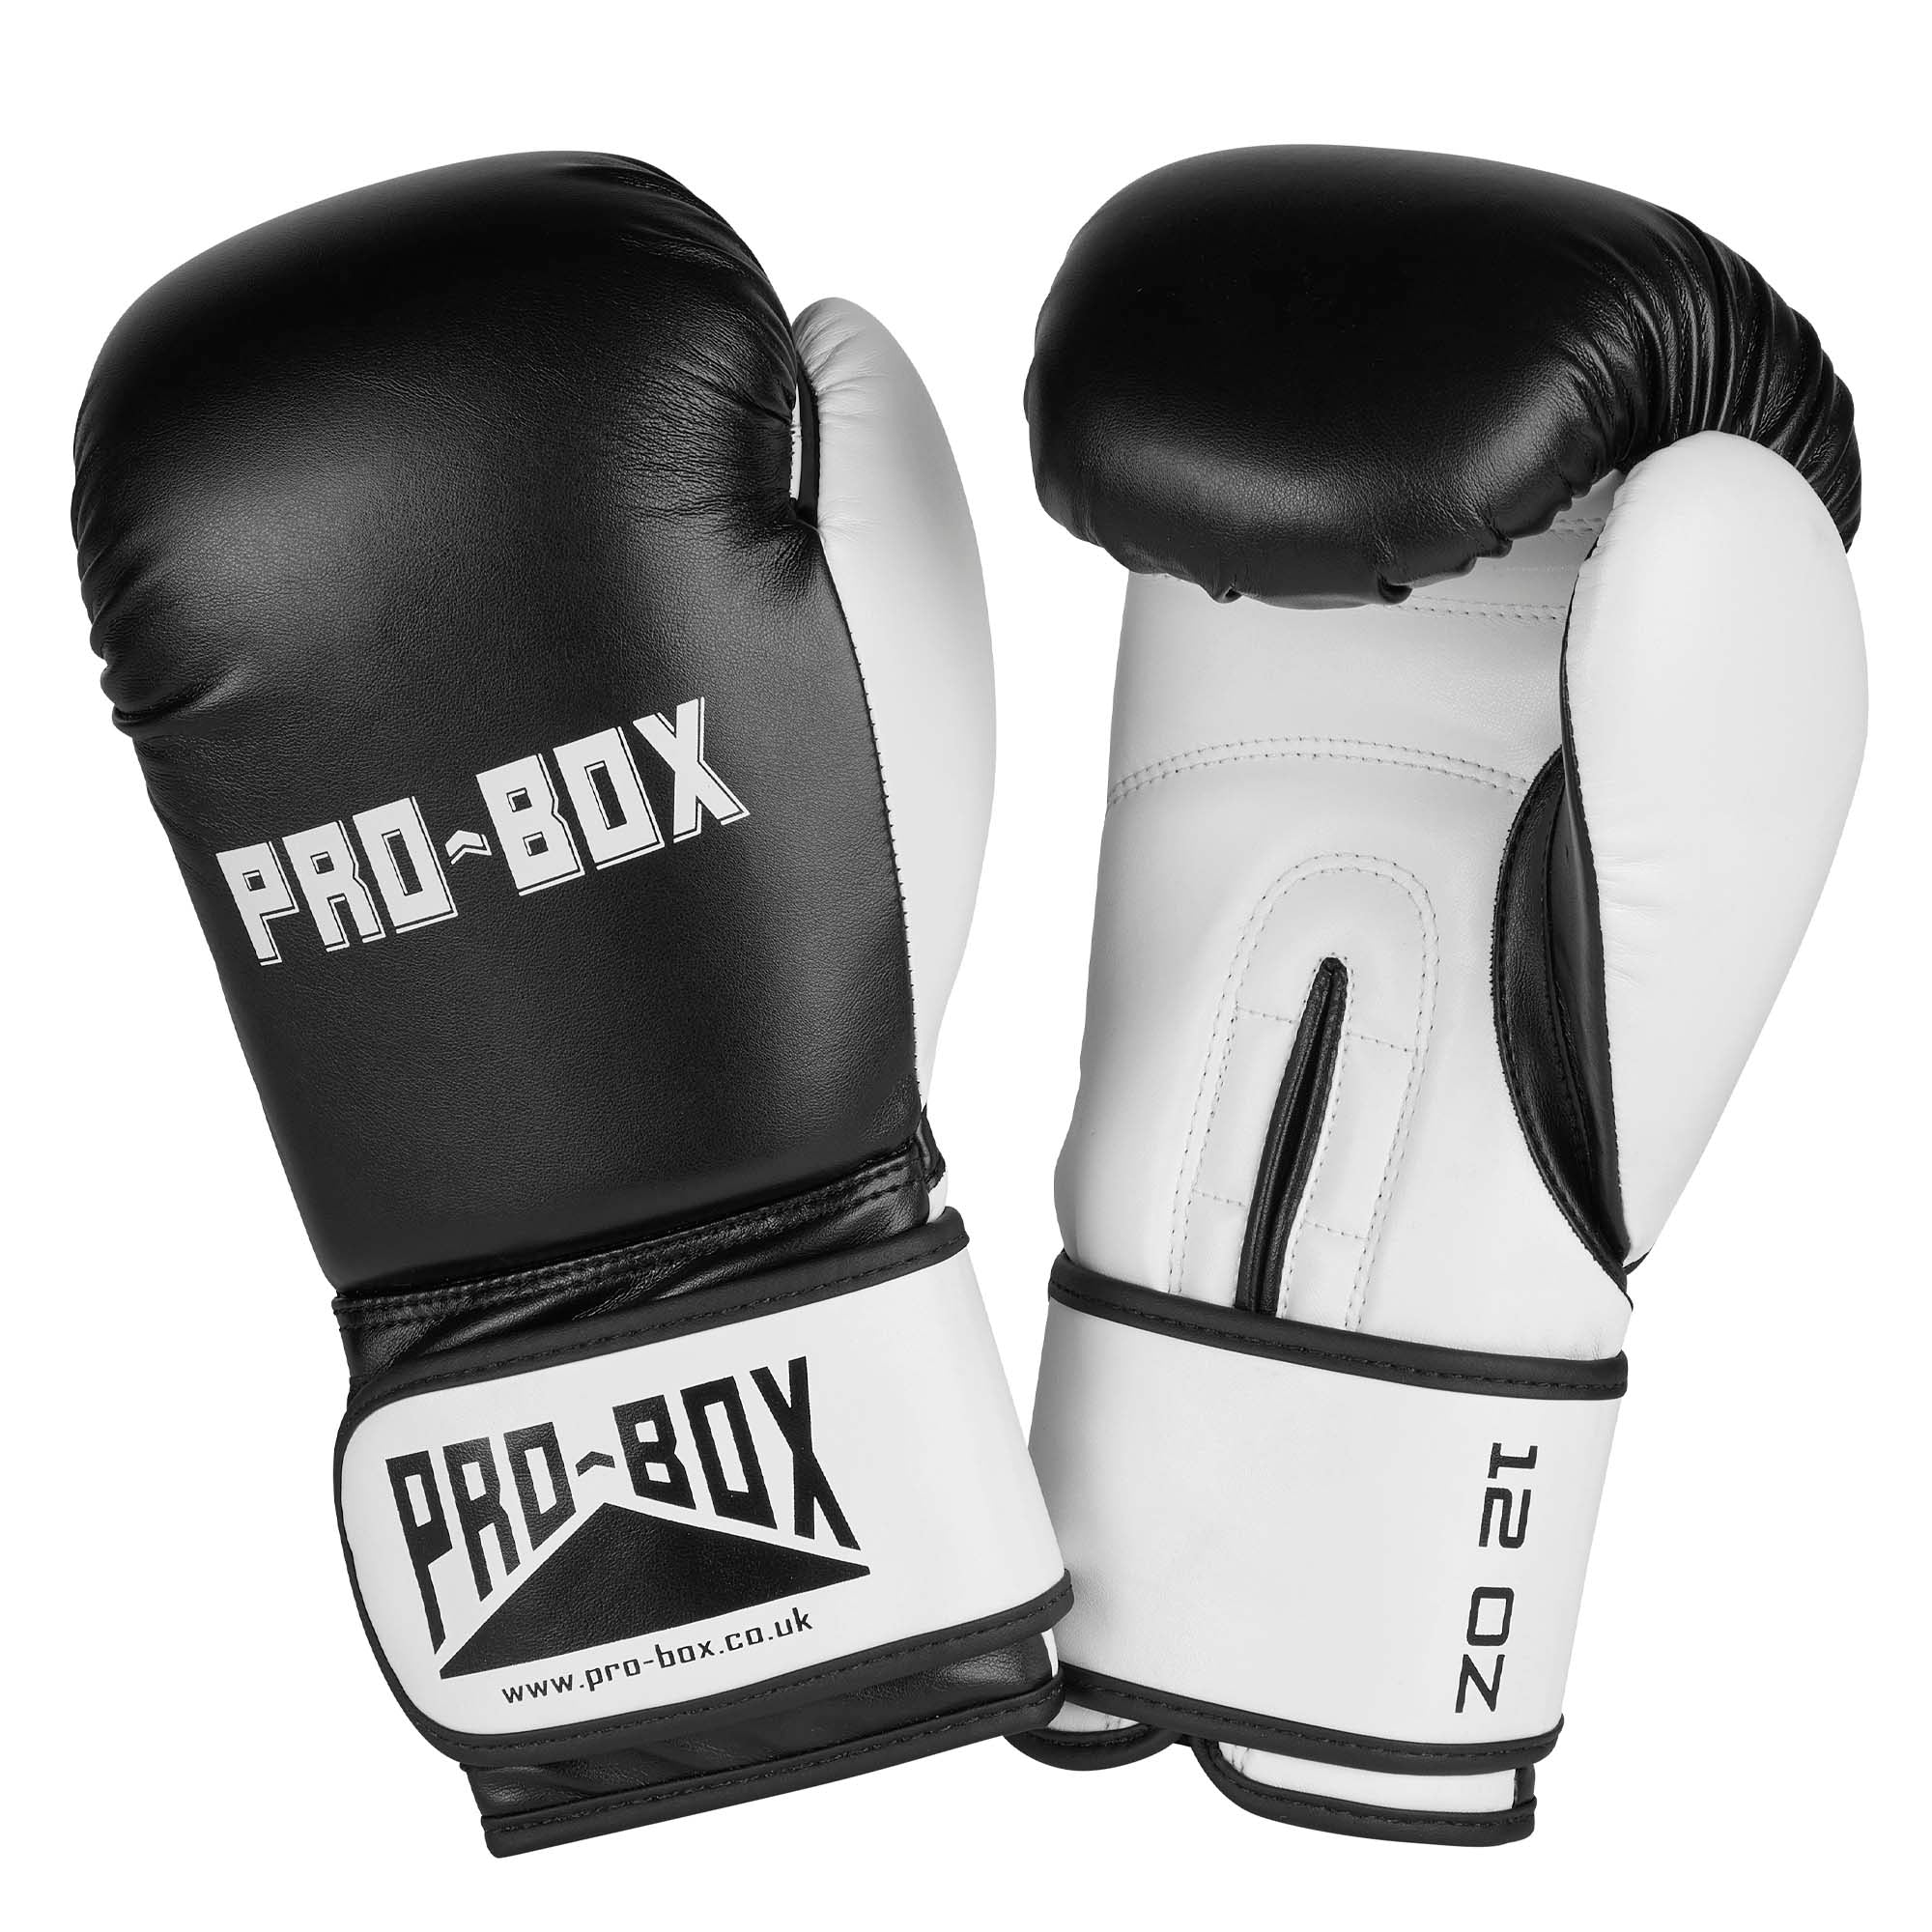 Pro-Box Club Spar Gloves